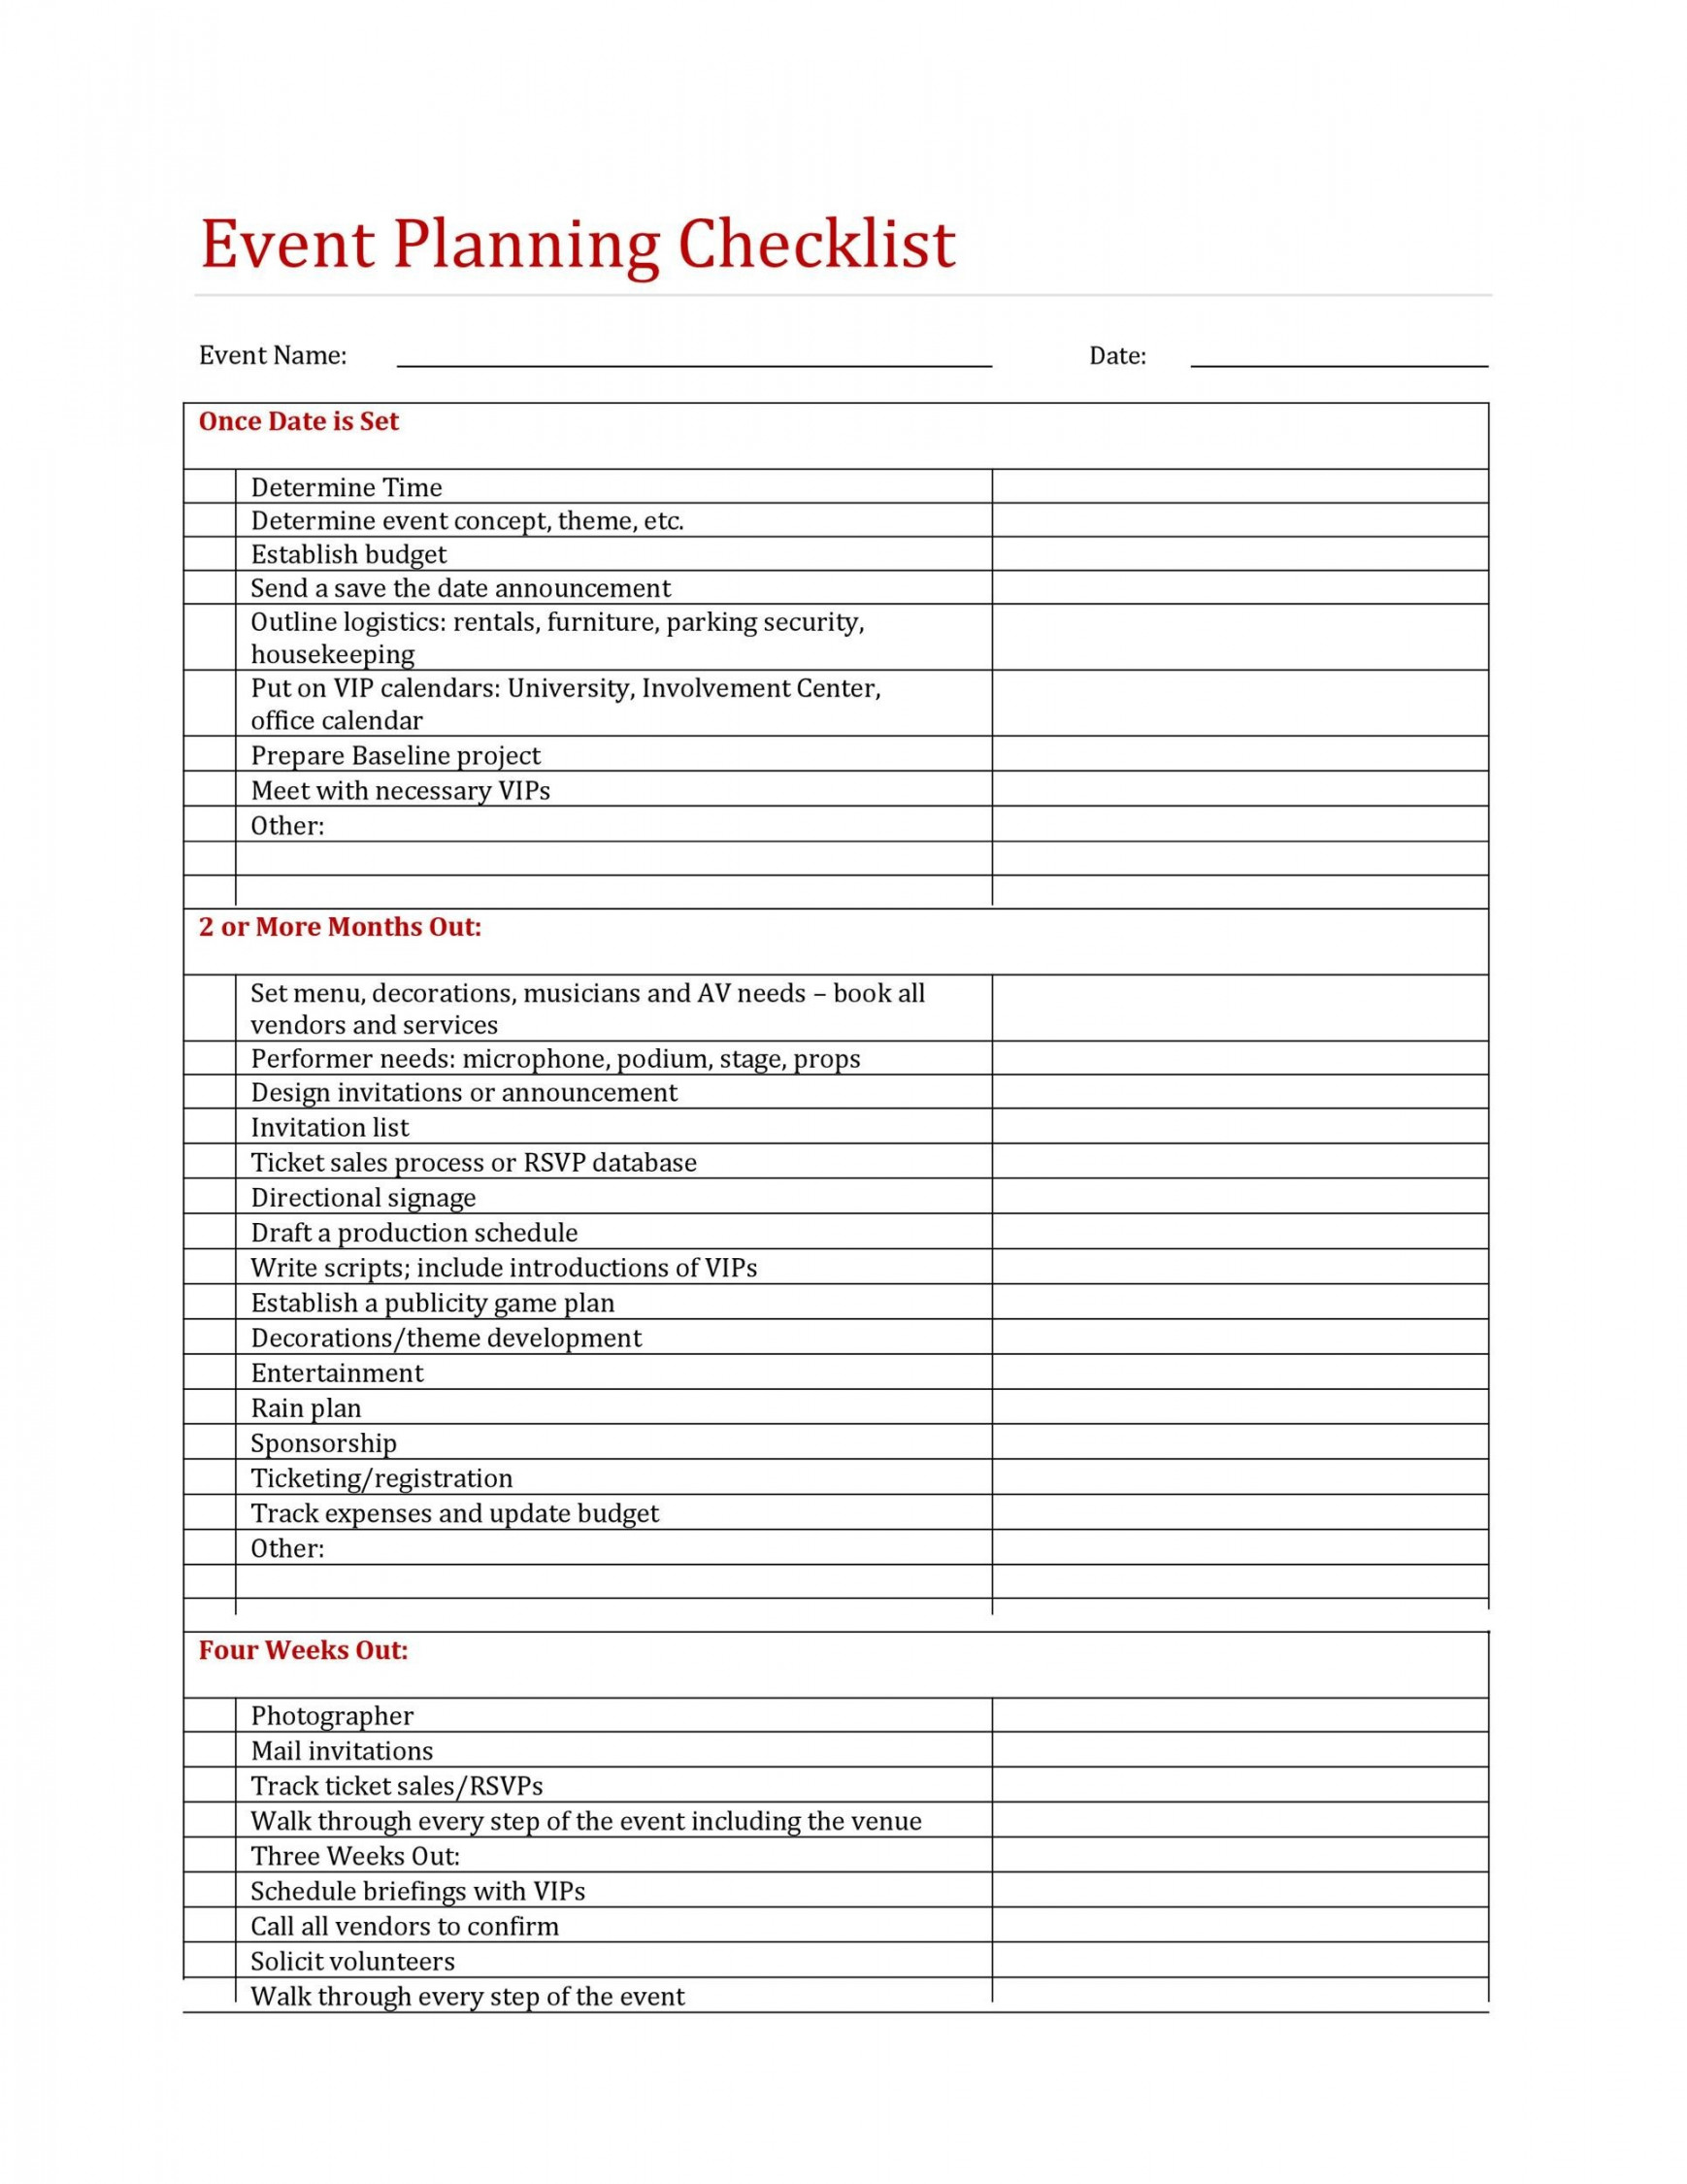 Professional Event Planning Checklist Templates ᐅ TemplateLab